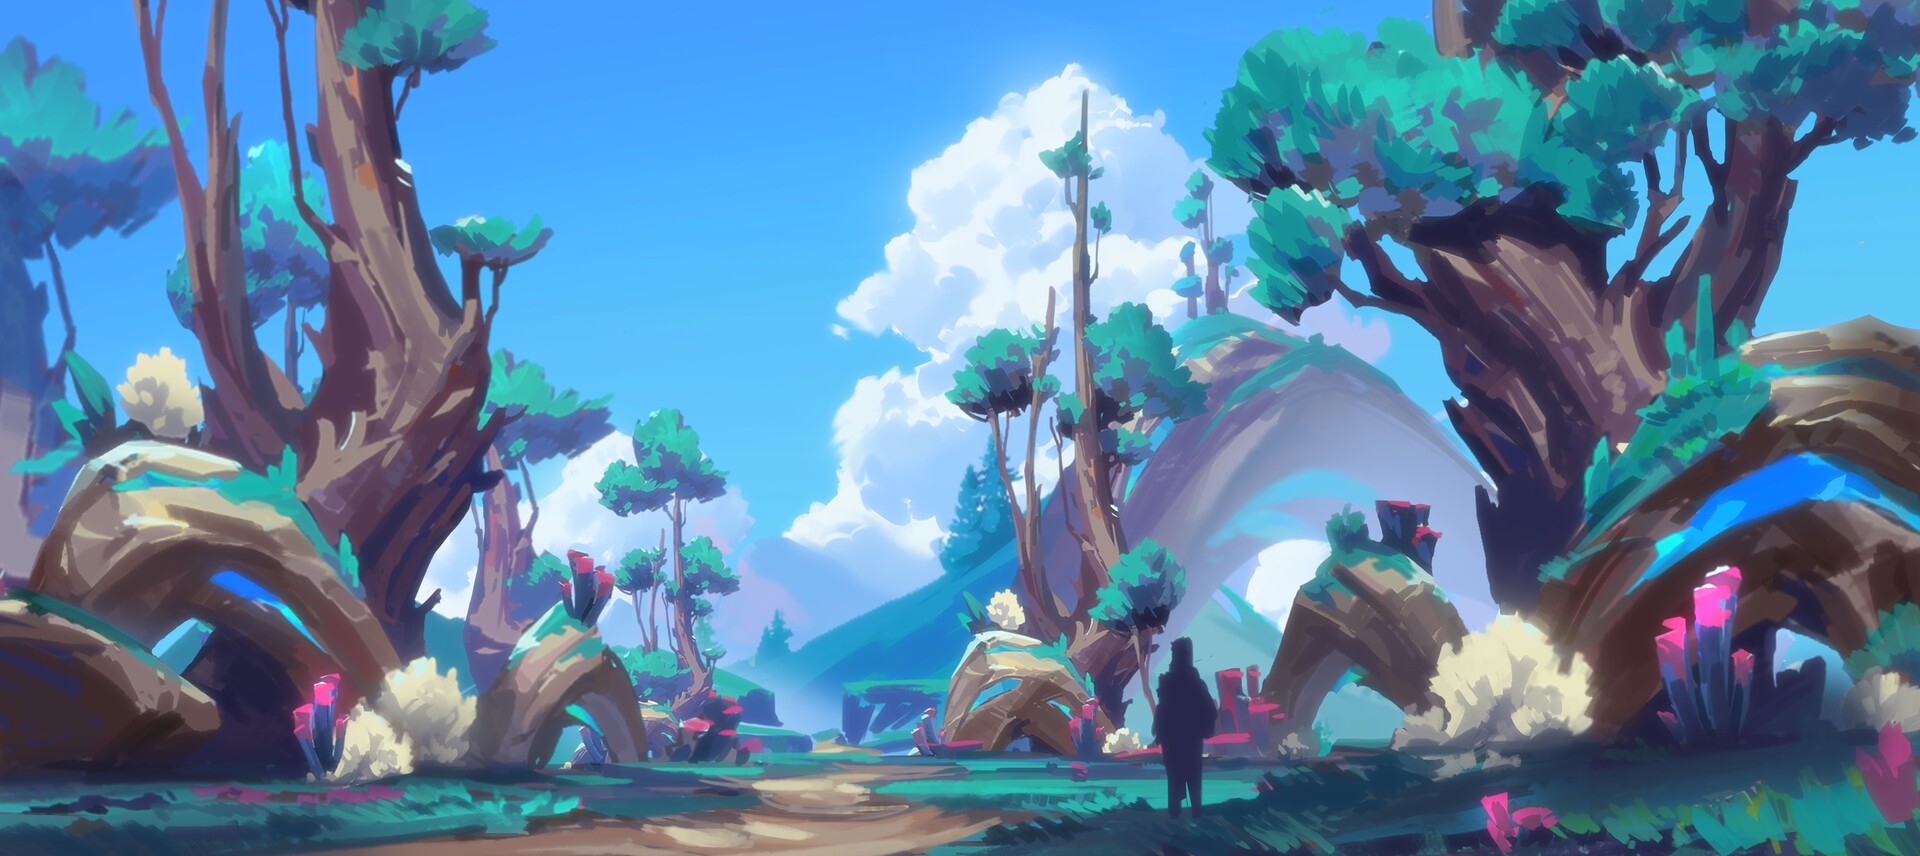 General 1920x856 likui tuosi digital art fantasy art trees forest clouds